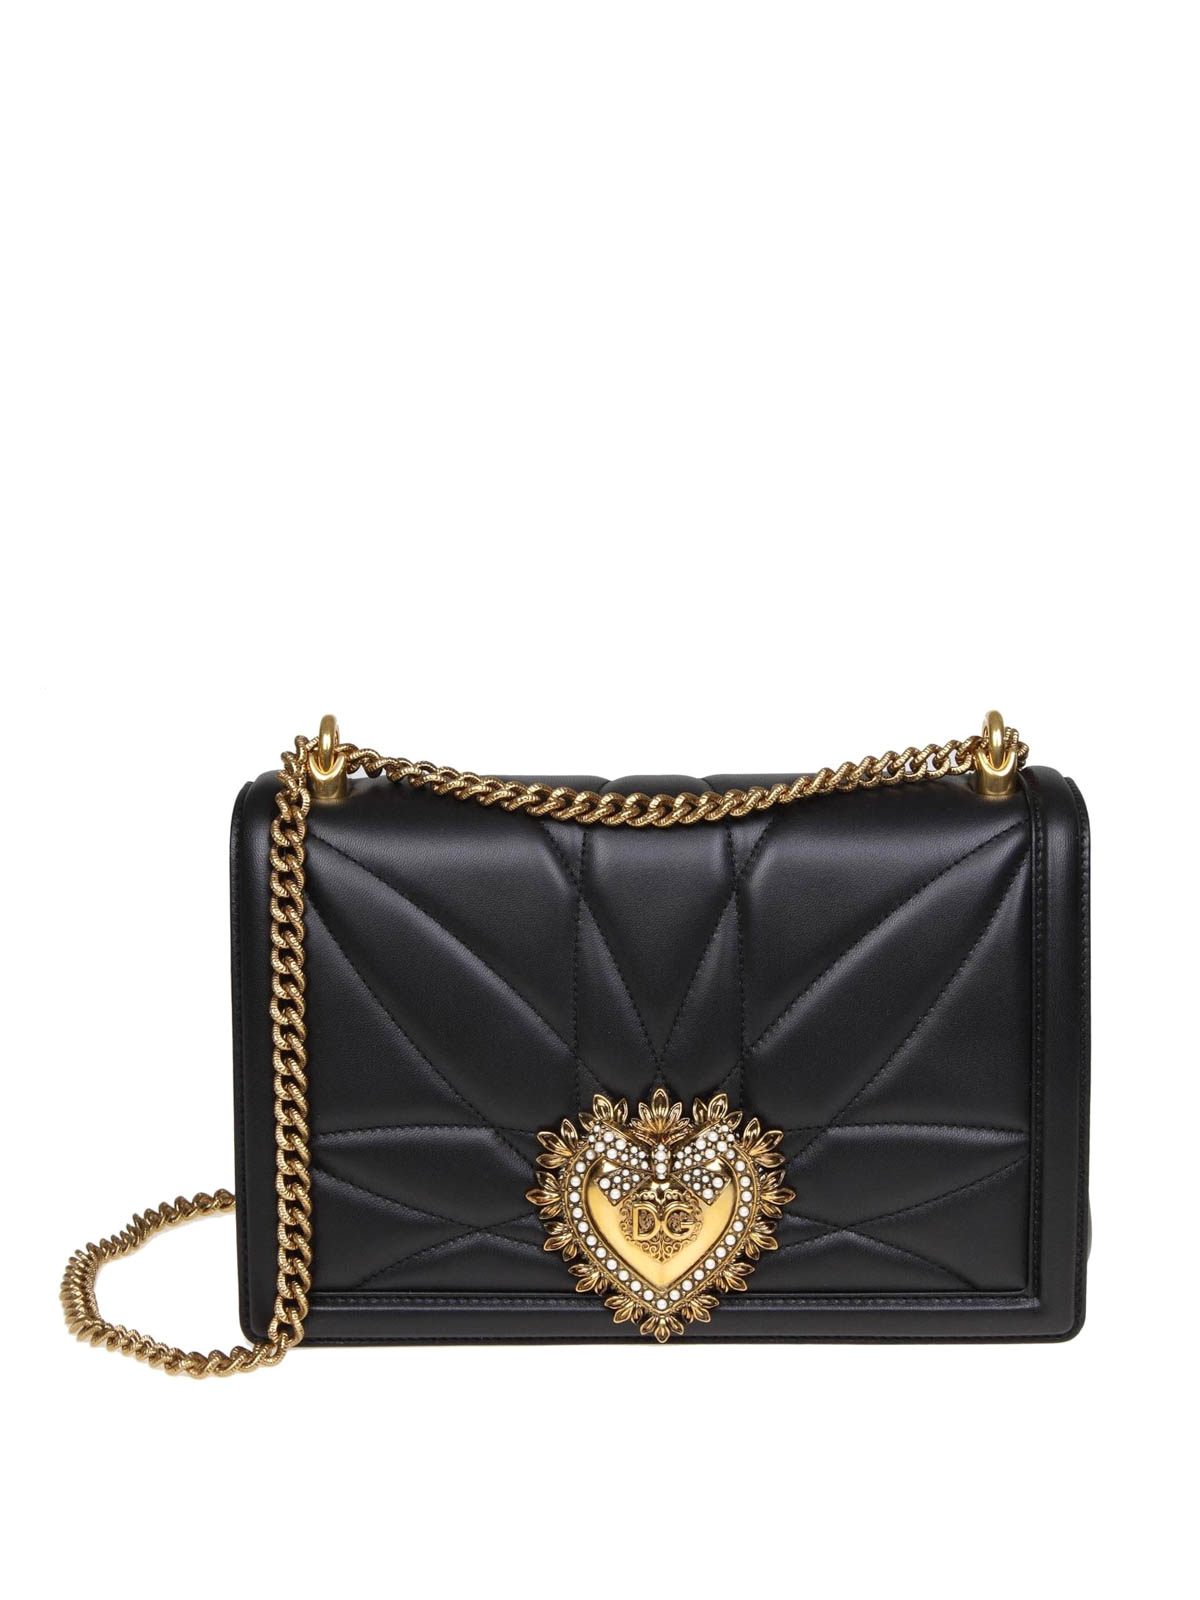 Dolce & Gabbana Devotion Black Quilted Nappa Large Bag